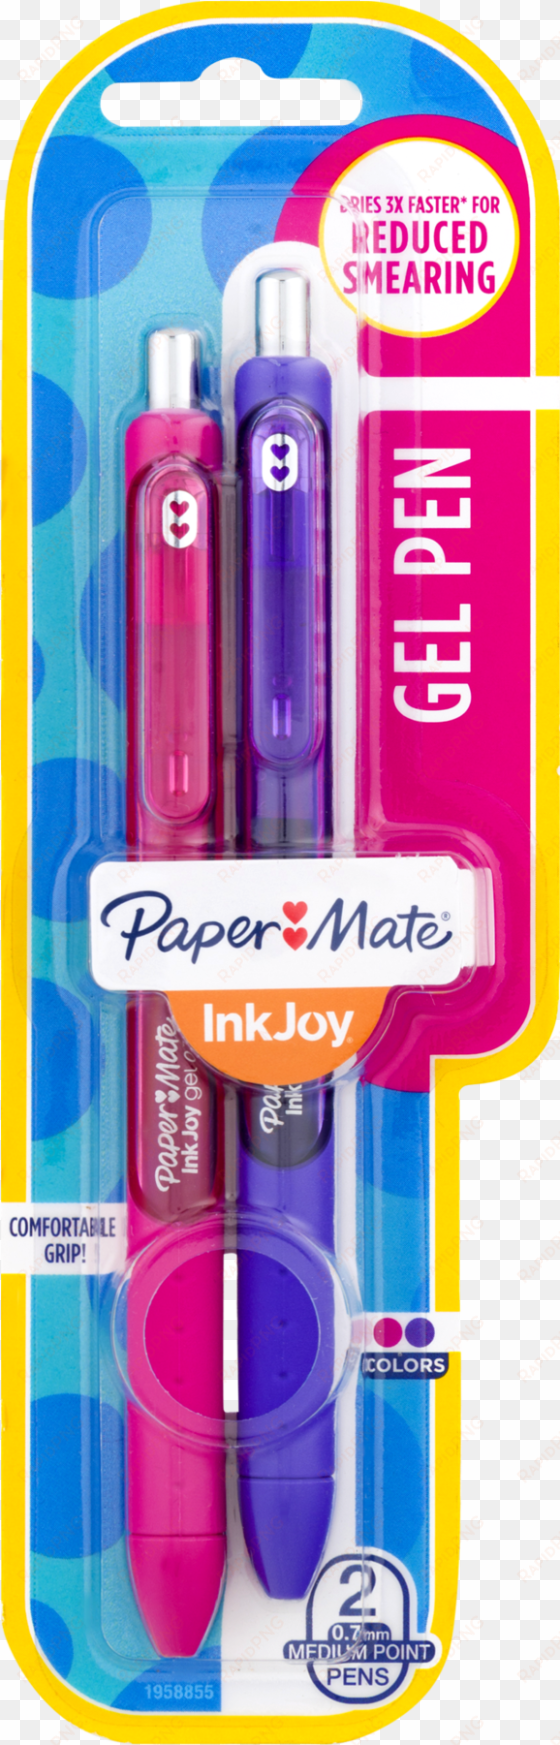 paper mate inkjoy gel pen, medium point (0.7 mm), assorted